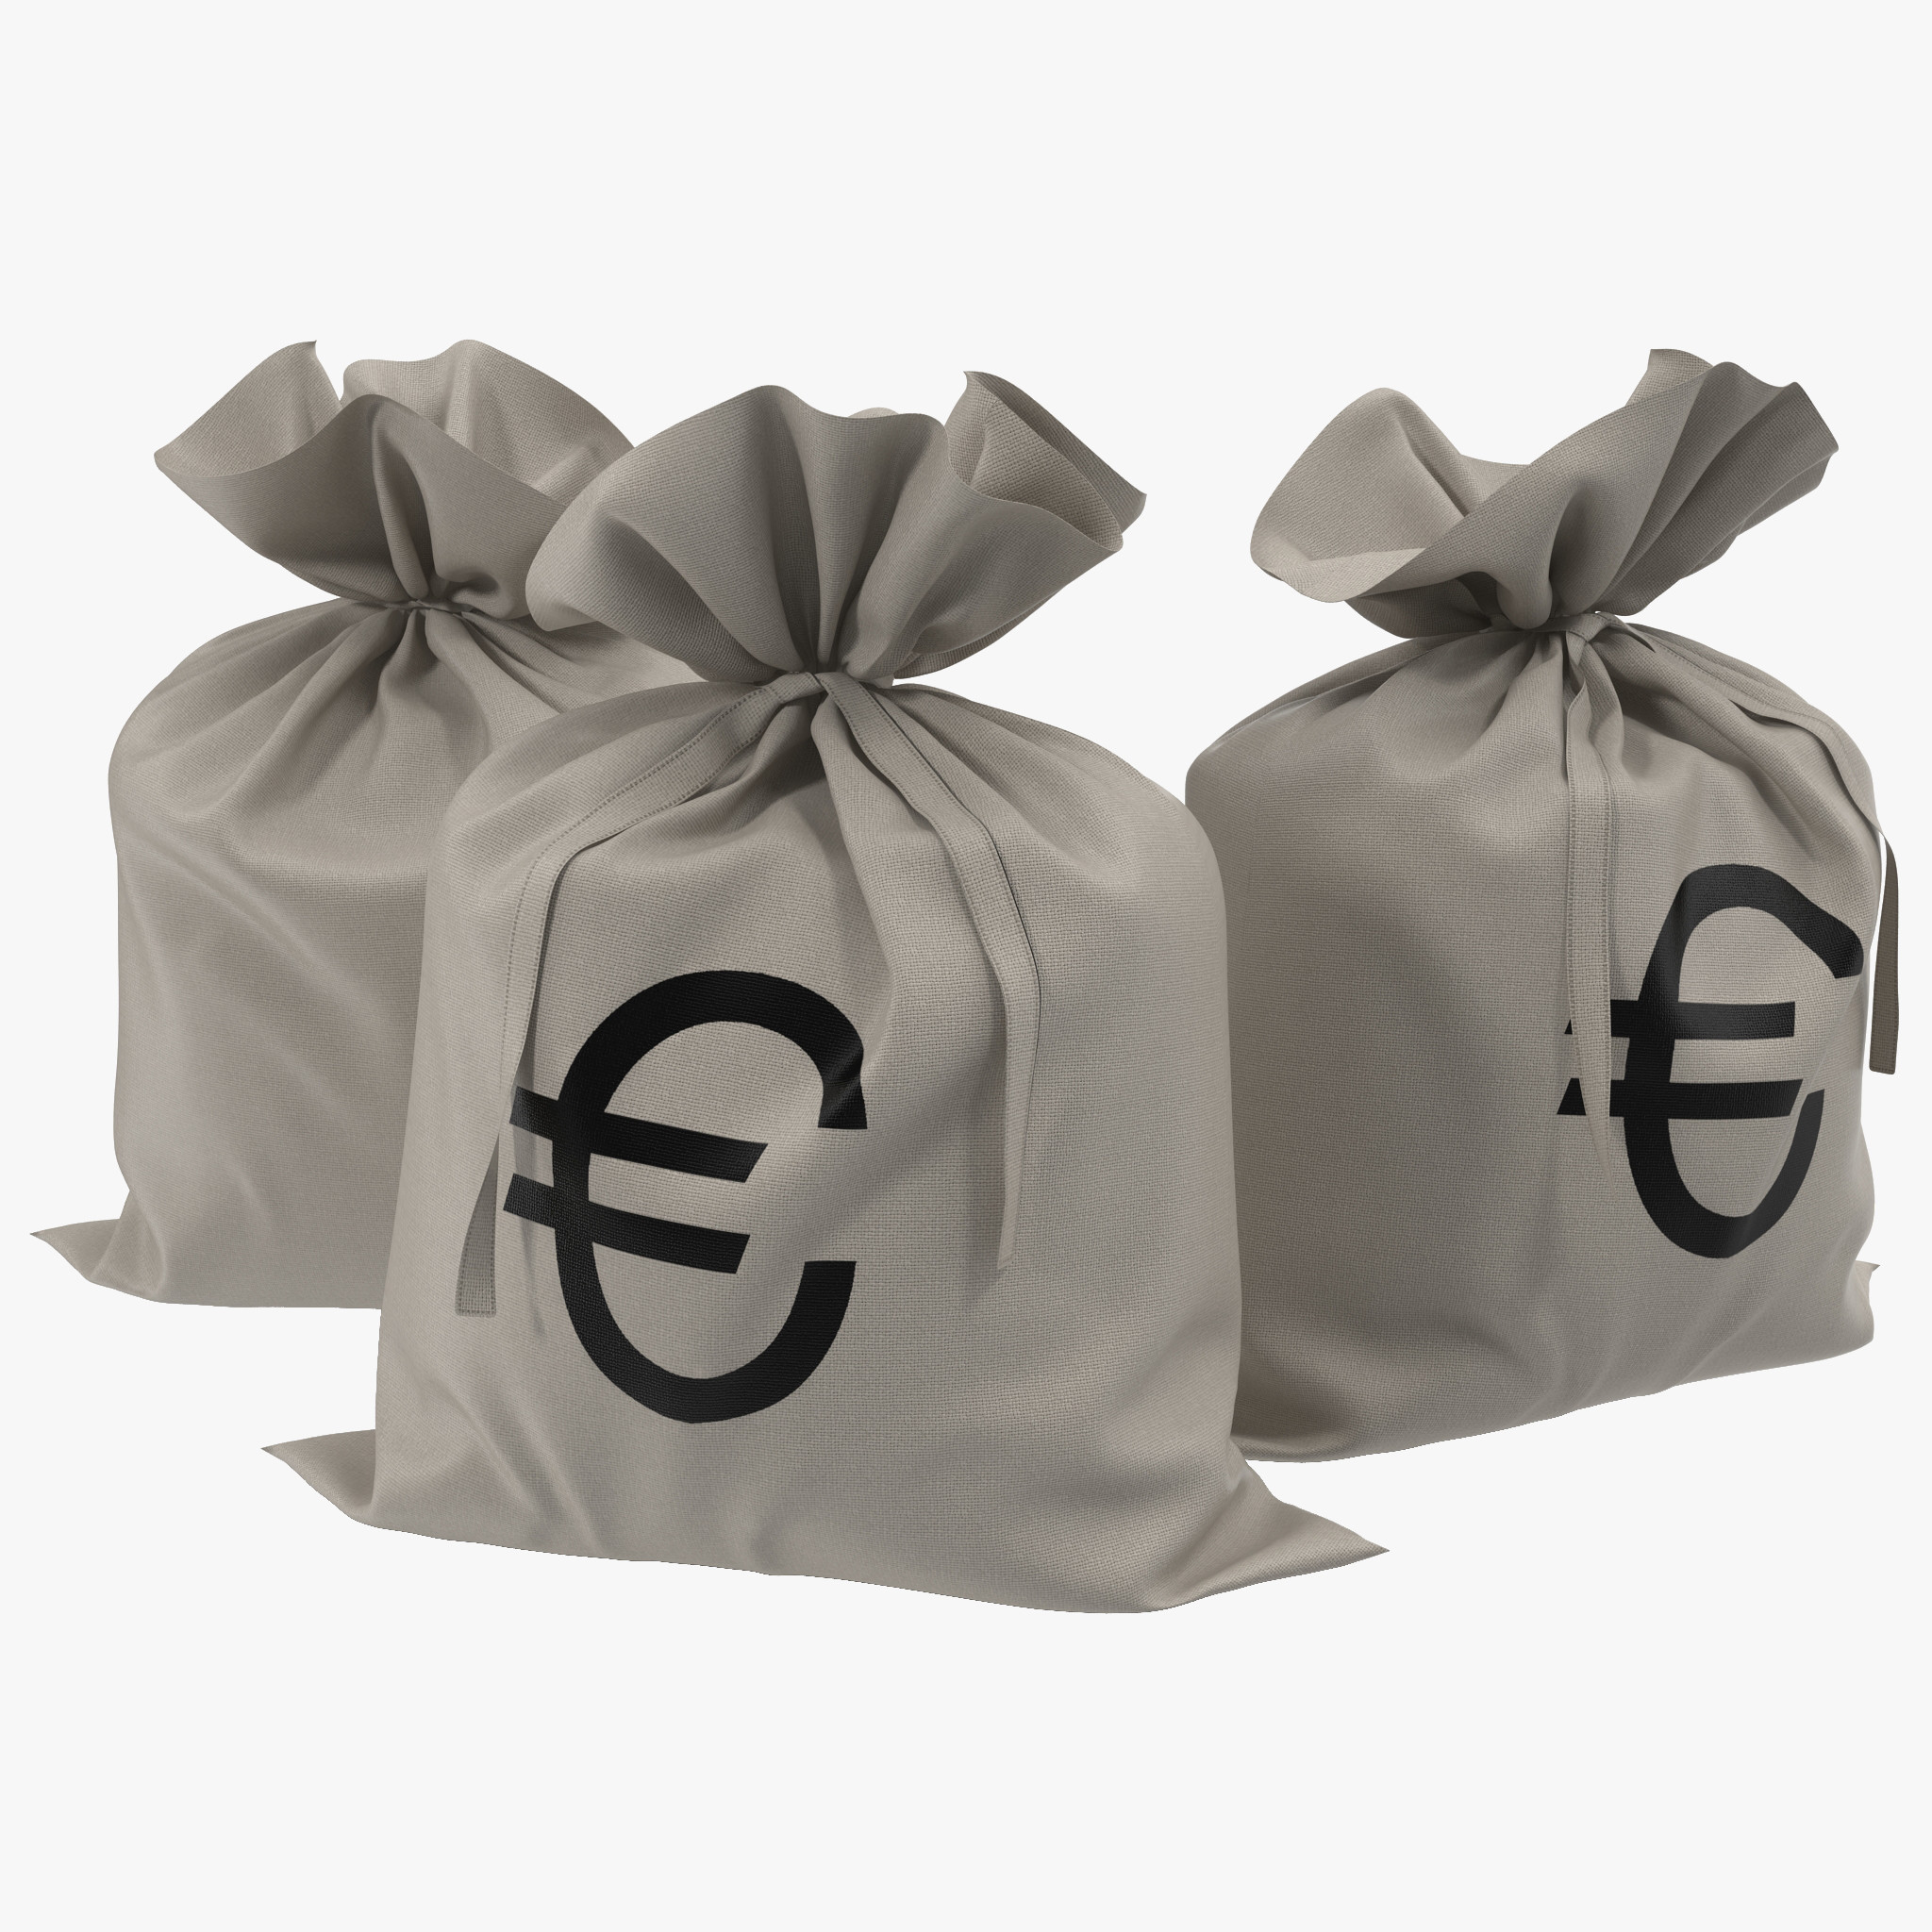 Евро в сумке